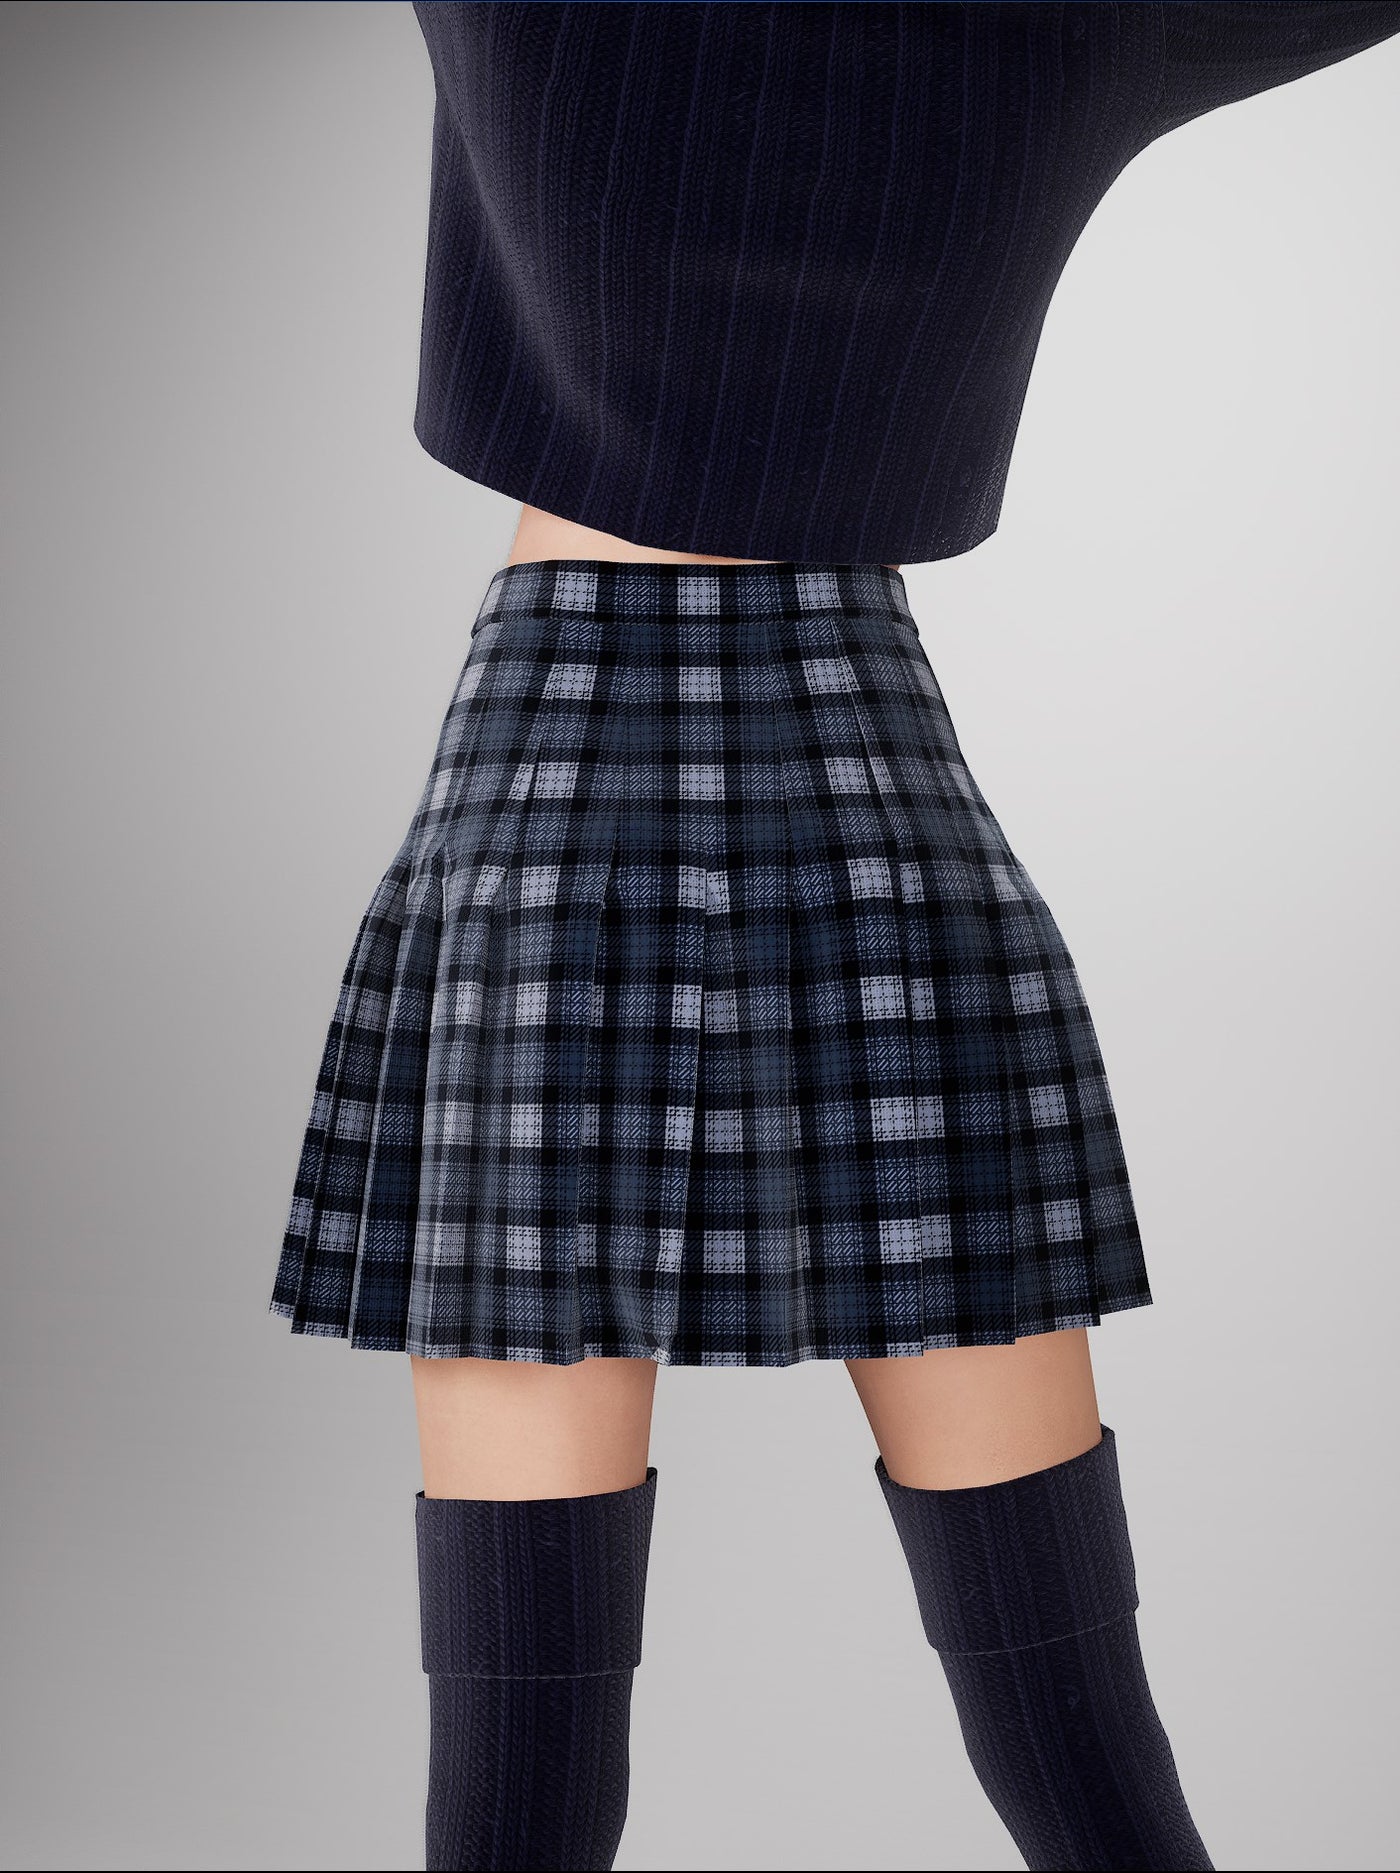 Pleated skirt - Dark blue/Checked - Ladies | H&M IN